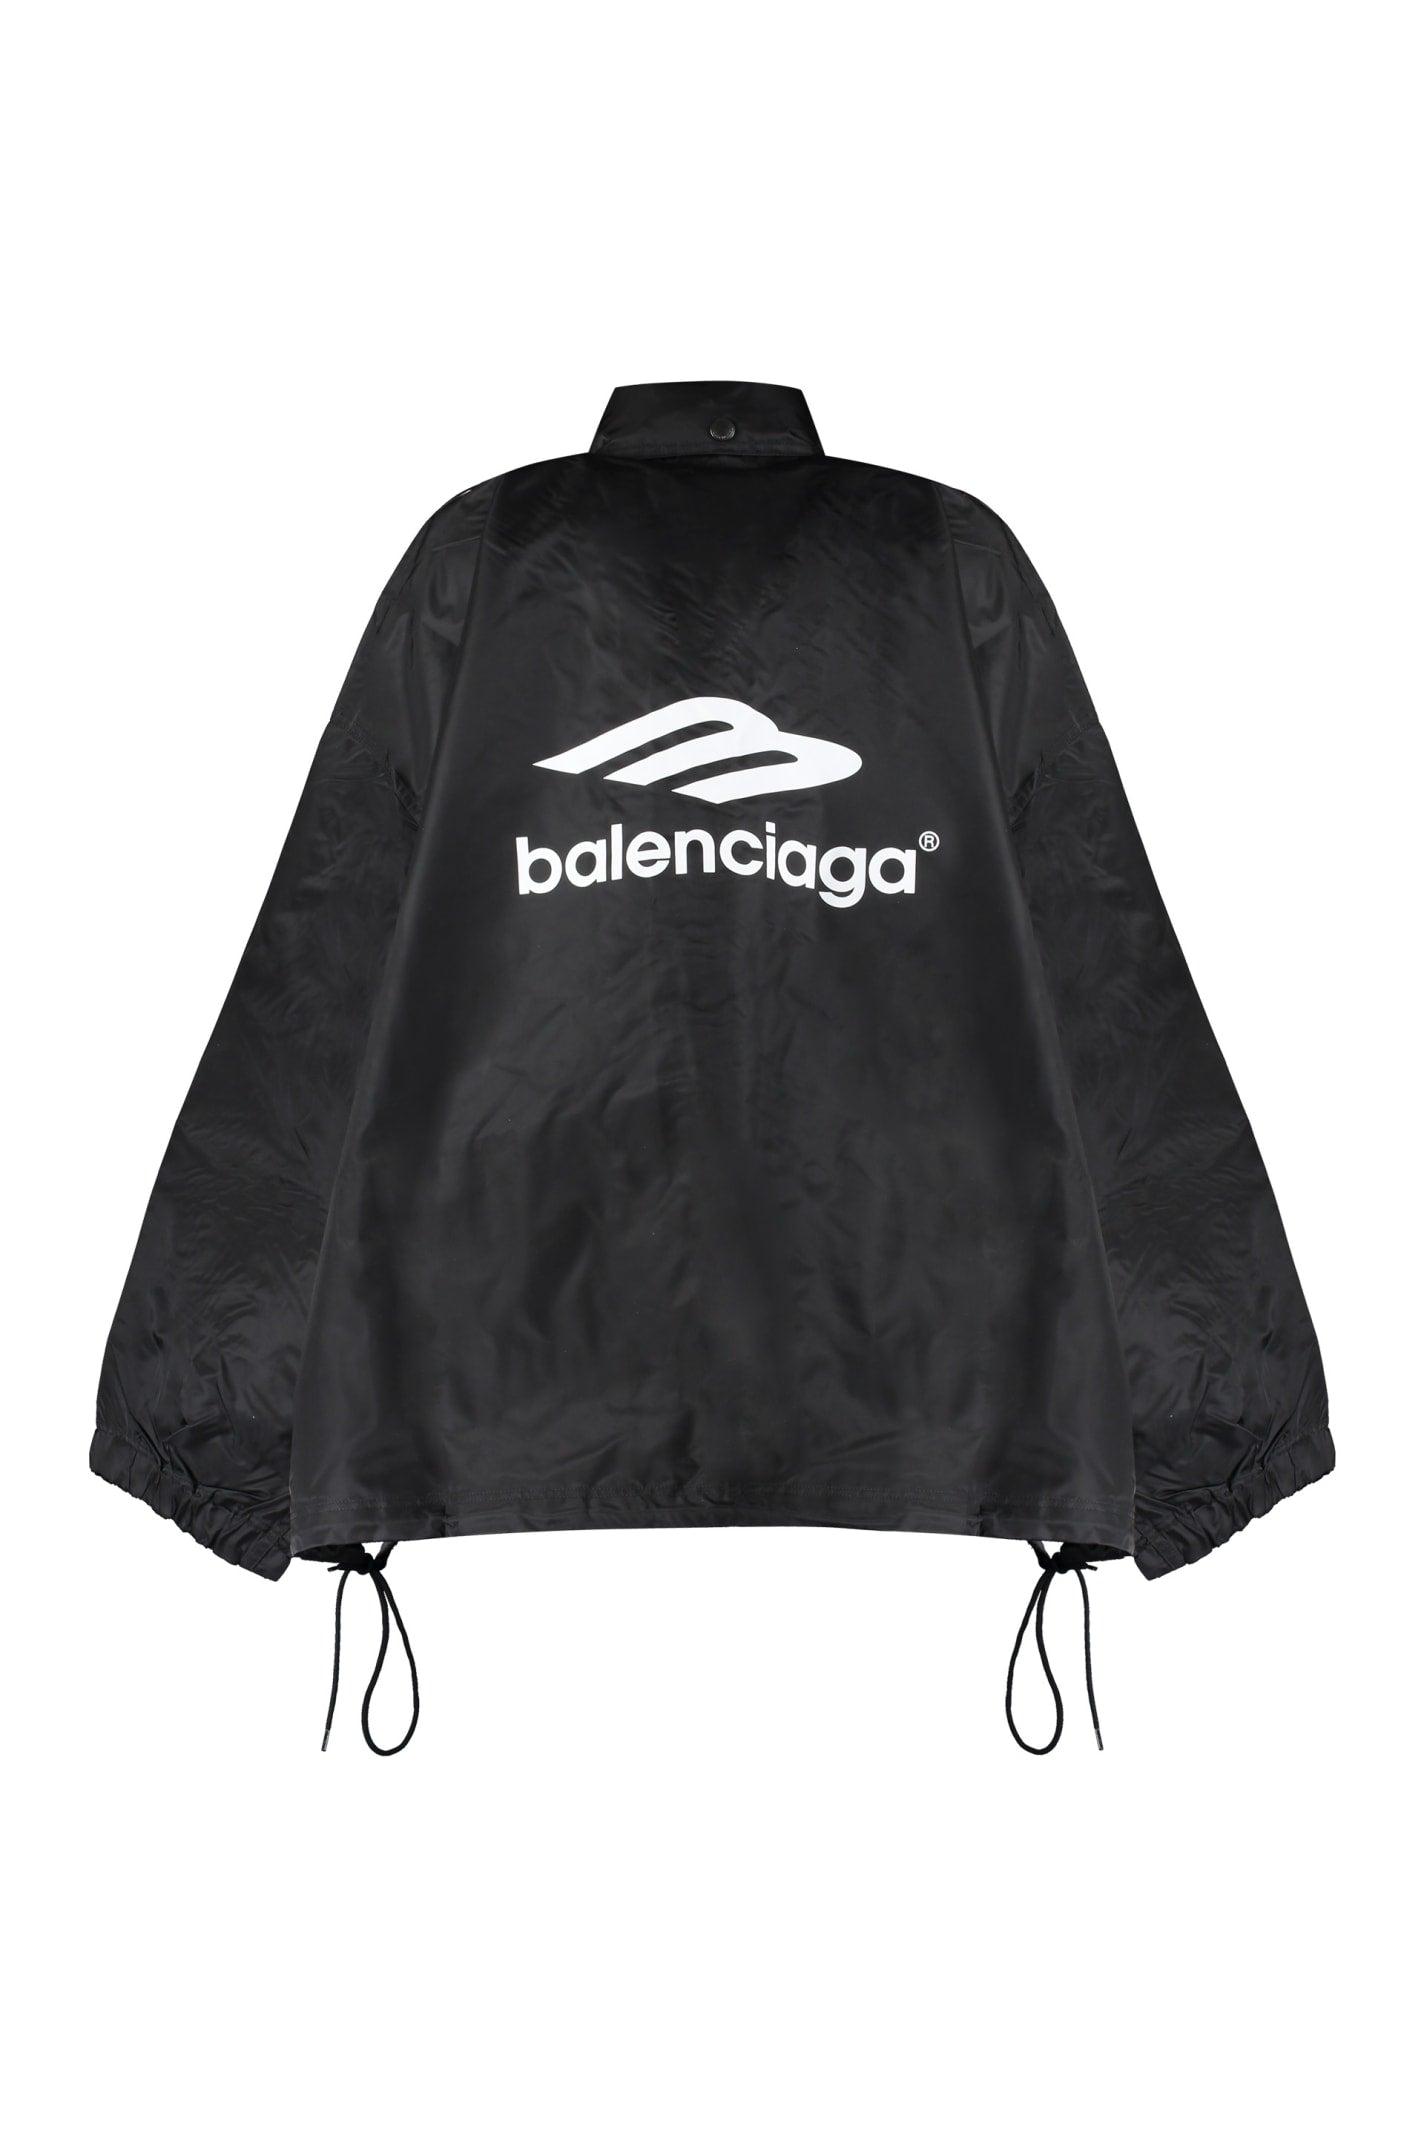 Balenciaga Logo Embroidery Windbreaker in Black | Lyst